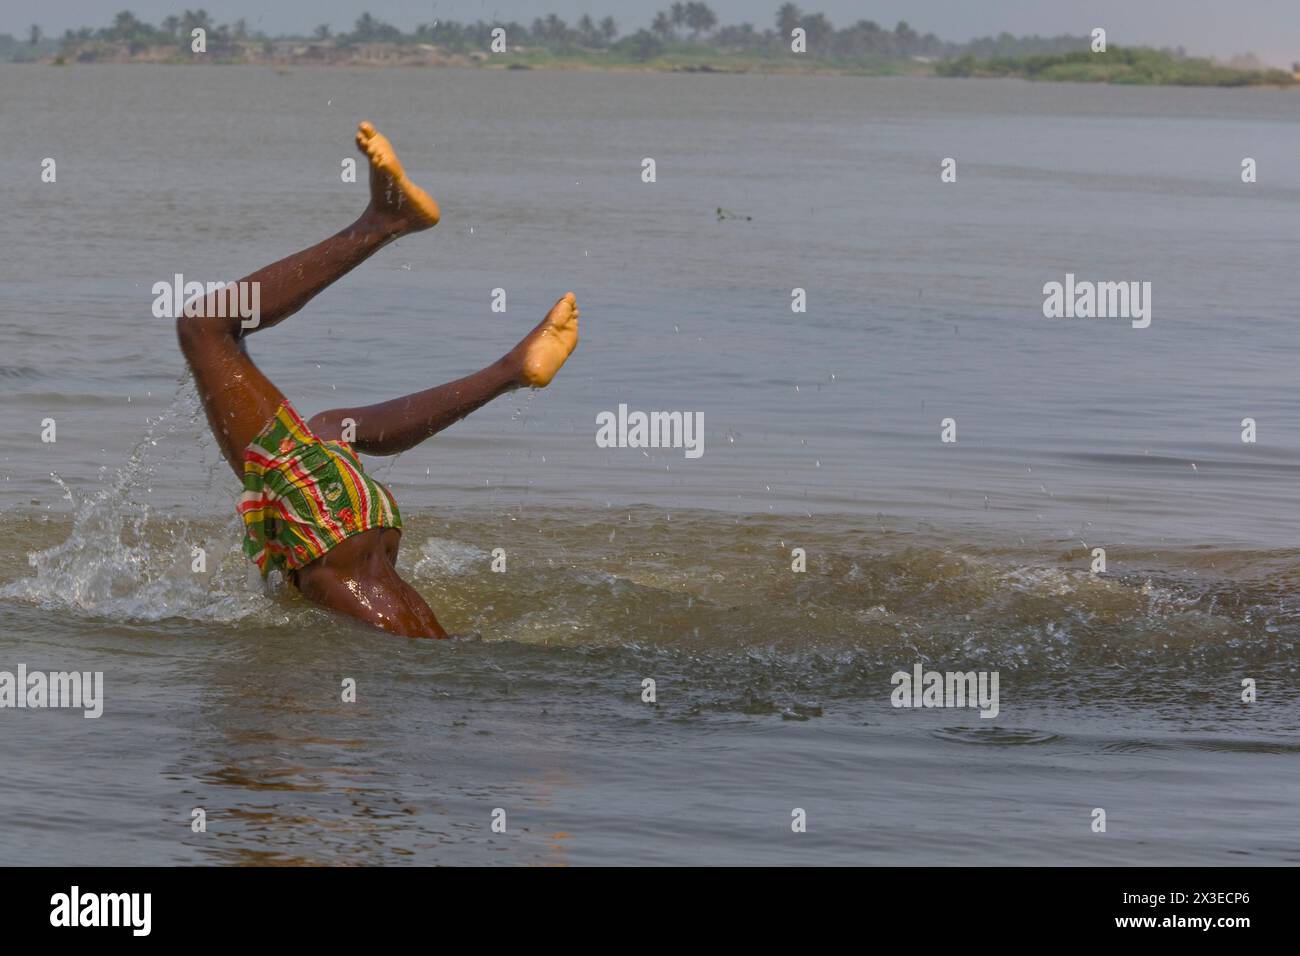 BATHING IN THE MONO RIVER BENIN Stock Photo